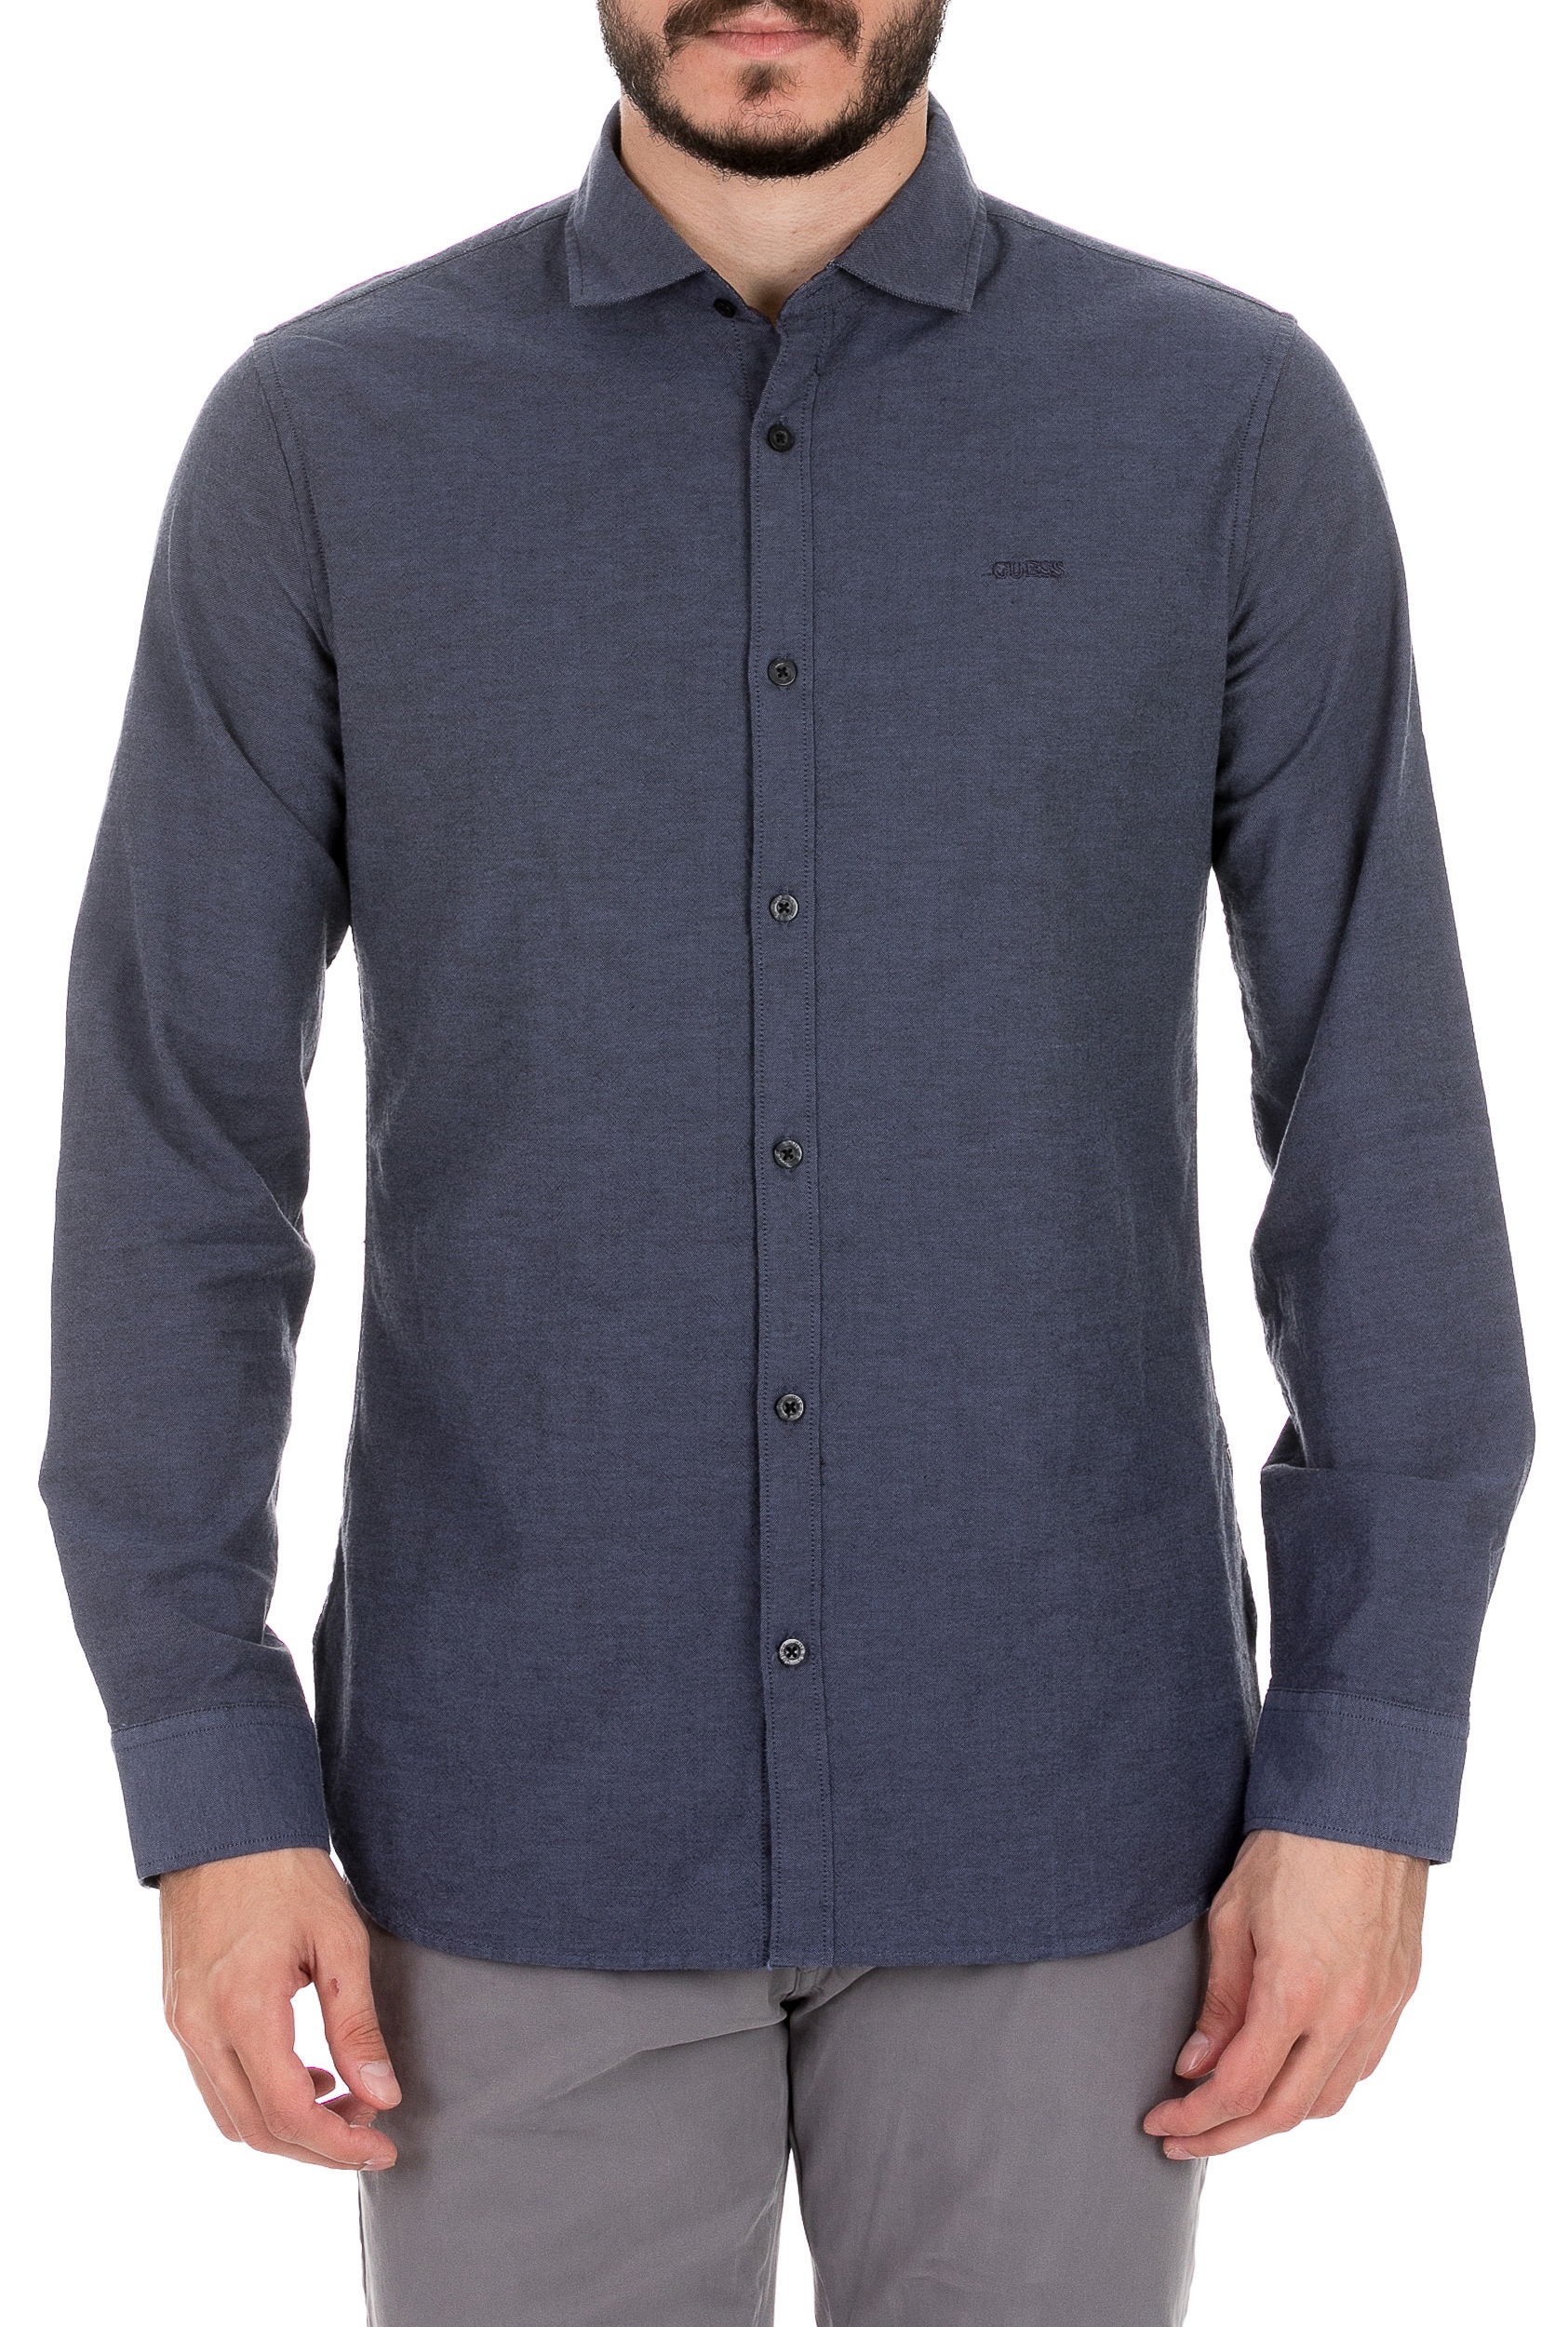 GUESS - Ανδρικό πουκάμισο GUESS ALAMEDA OXFORD μπλε